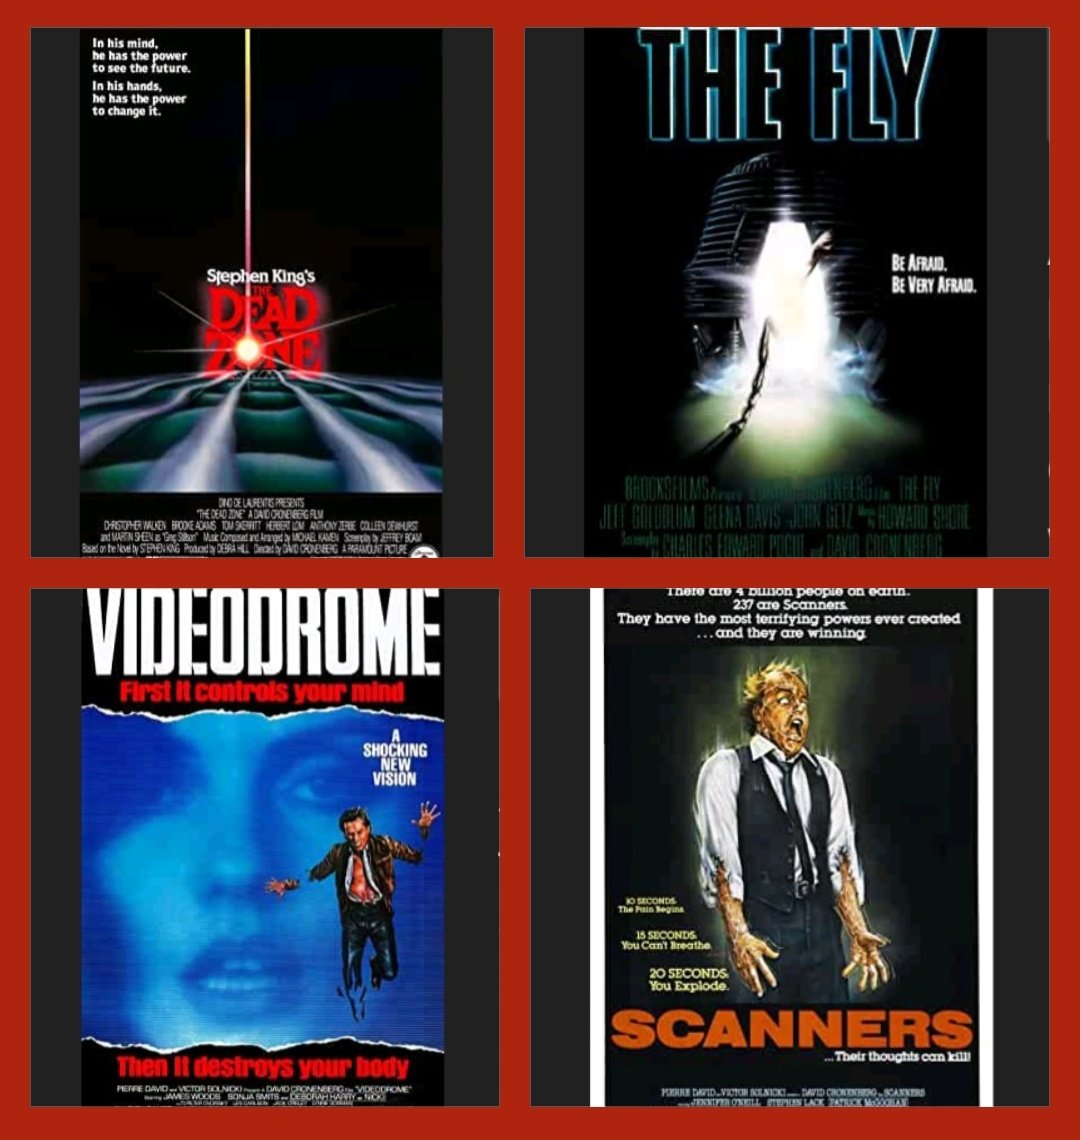 #MorningMovieQuestion 

Favorite David Cronenberg scifi movie?

#movies #FilmTwitter #DavidCronenberg #scifi
#wednesdaythought 
#Videodrome #TheDeadZone
#TheFly #Scanners